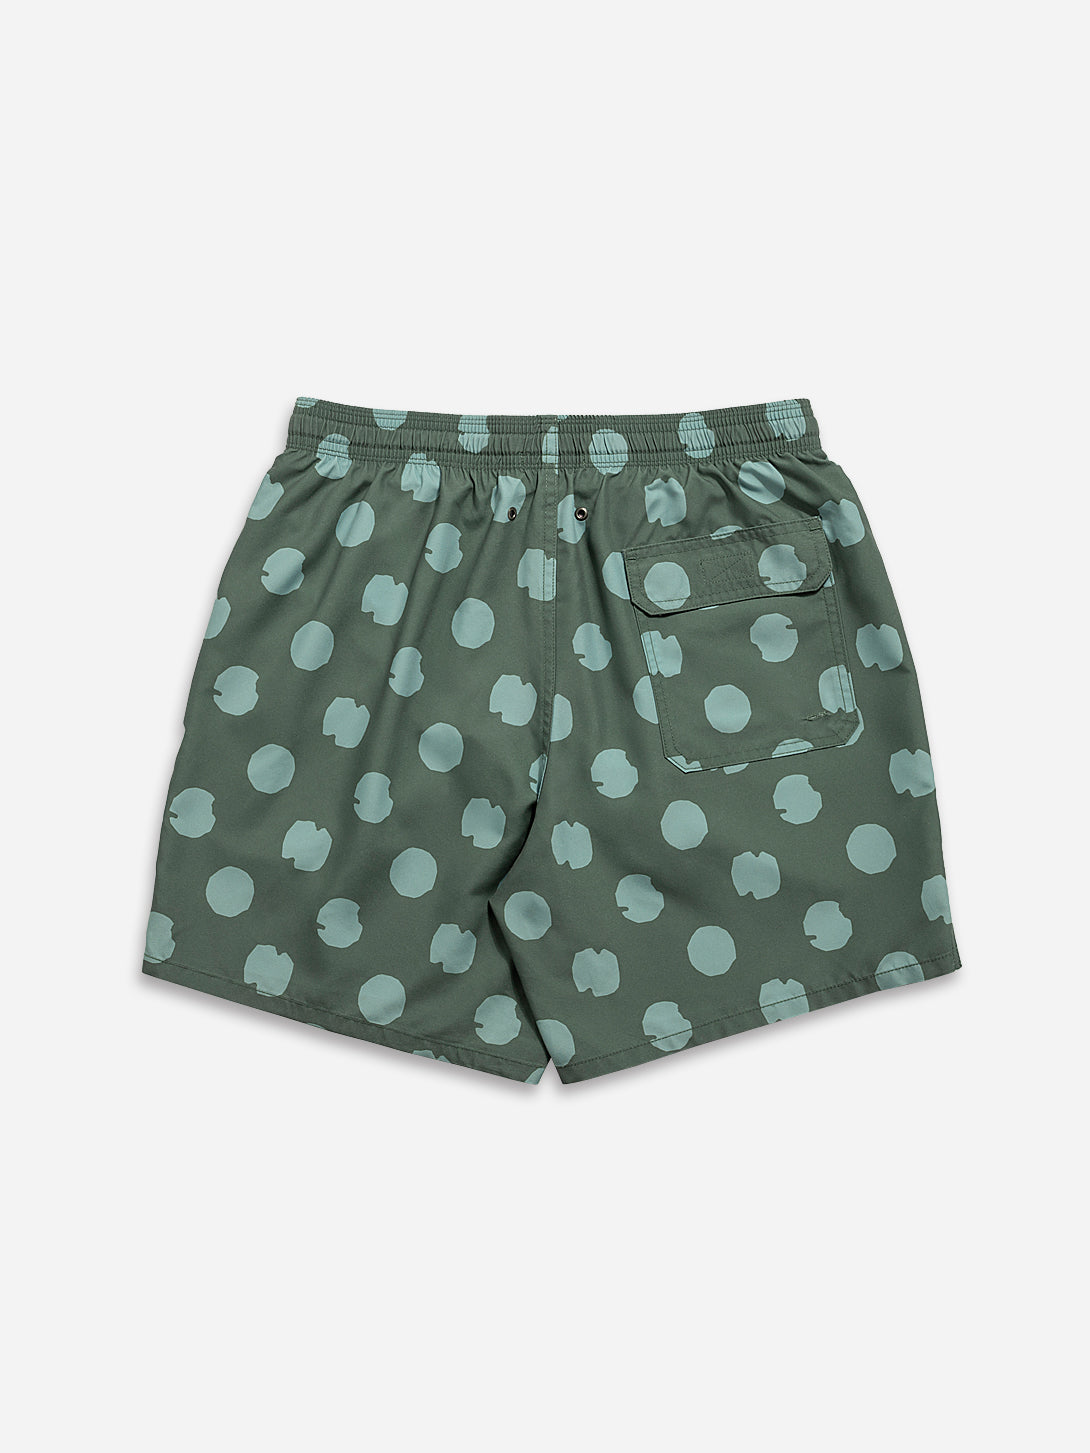 Balsam Green Pr Men's Swim Printed Twill Shorts